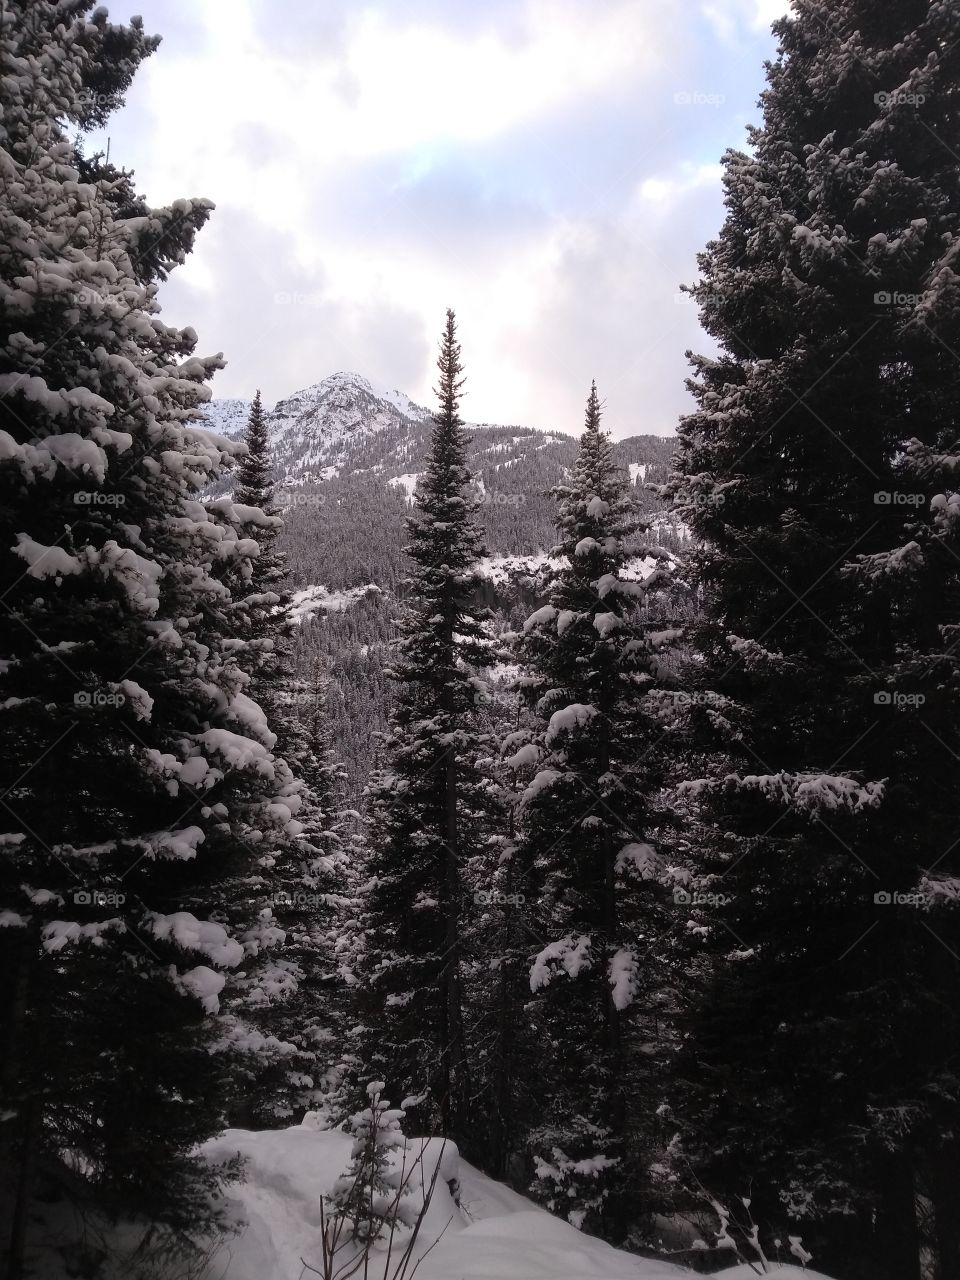 Peeking through the snow laden trees